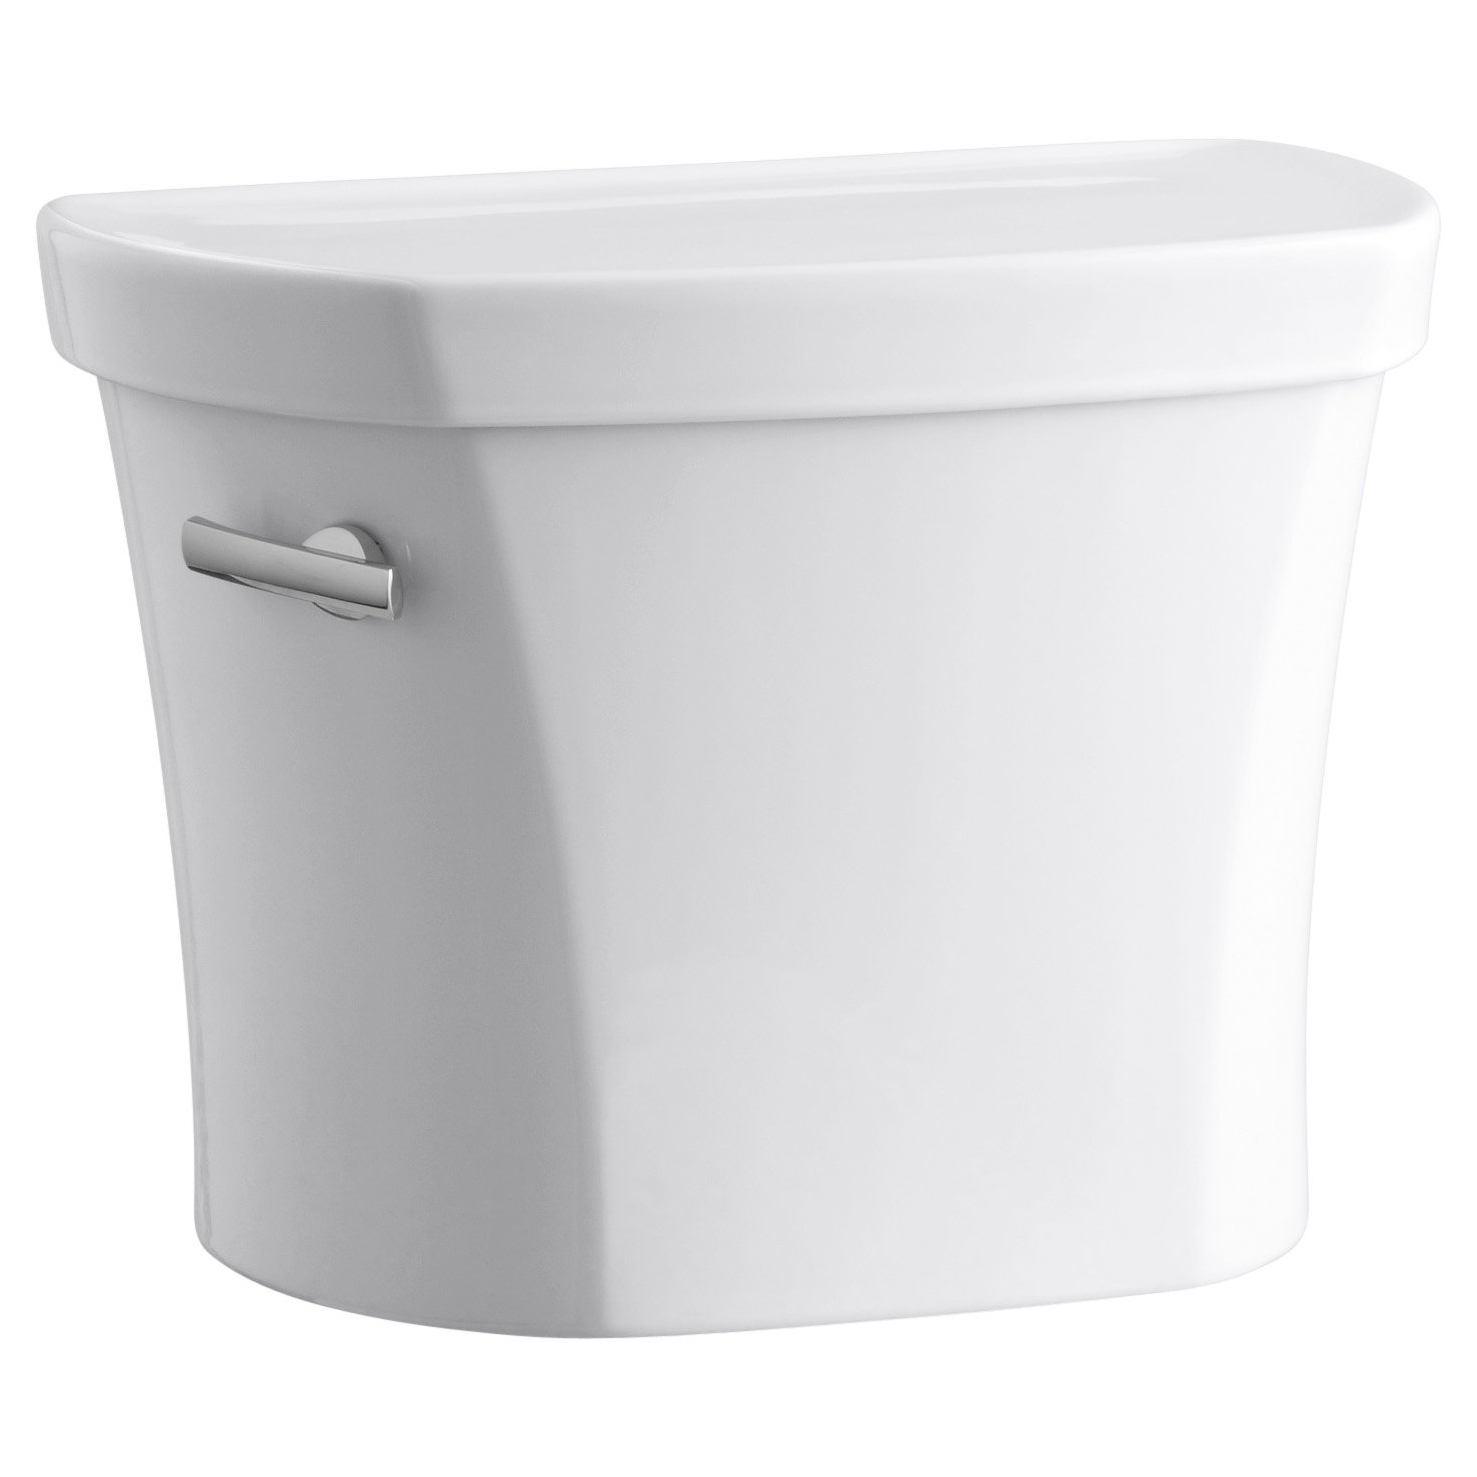 Wellworth 1.28 gpf Toilet Tank w/14" Rough-In/Locks in White